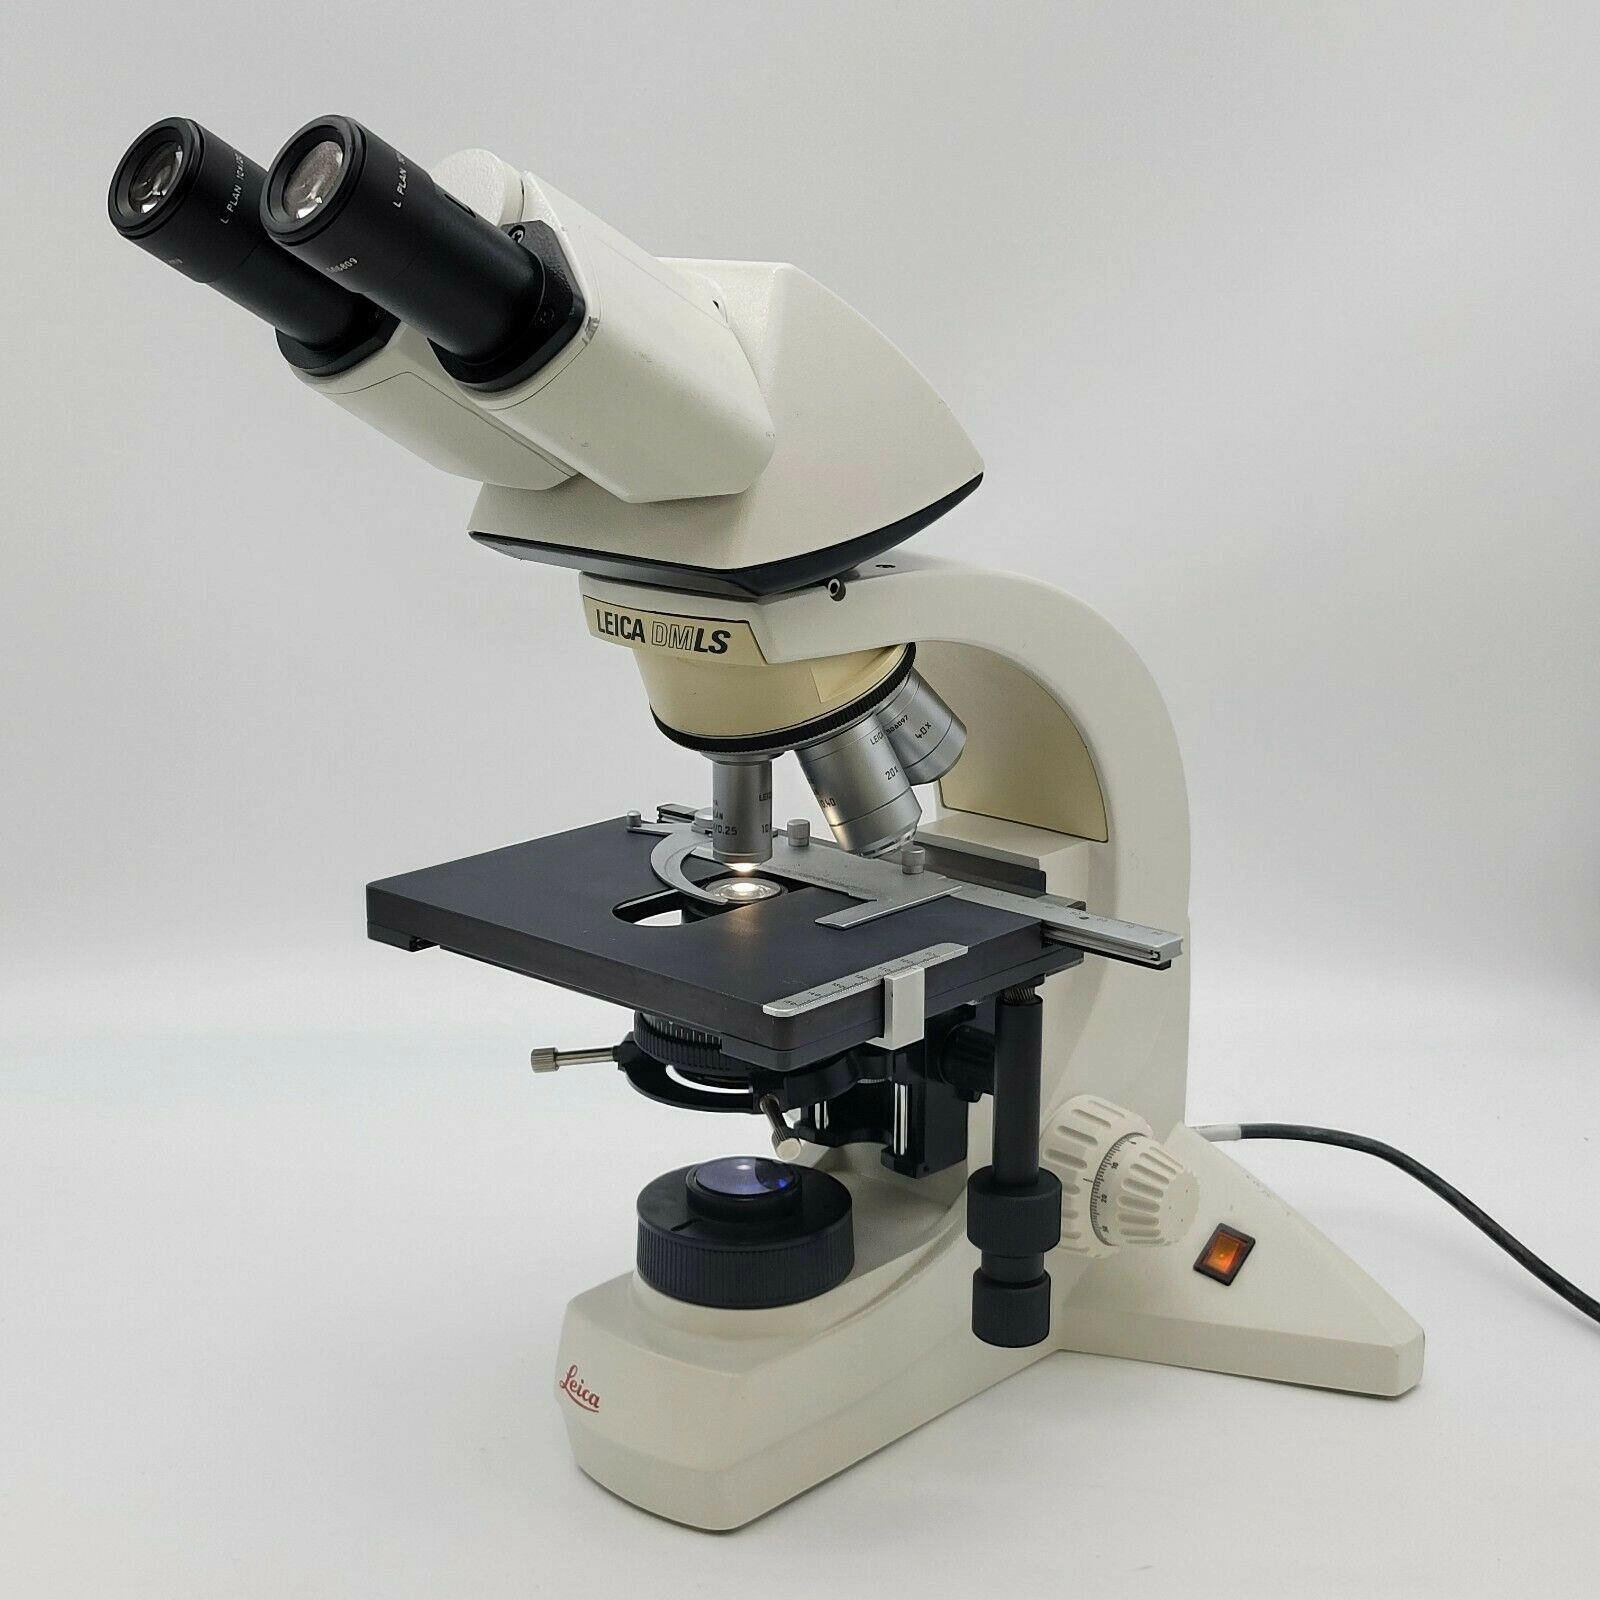 Leica Microscope DMLS with 10x 20x 40x Objectives and Binocular Head